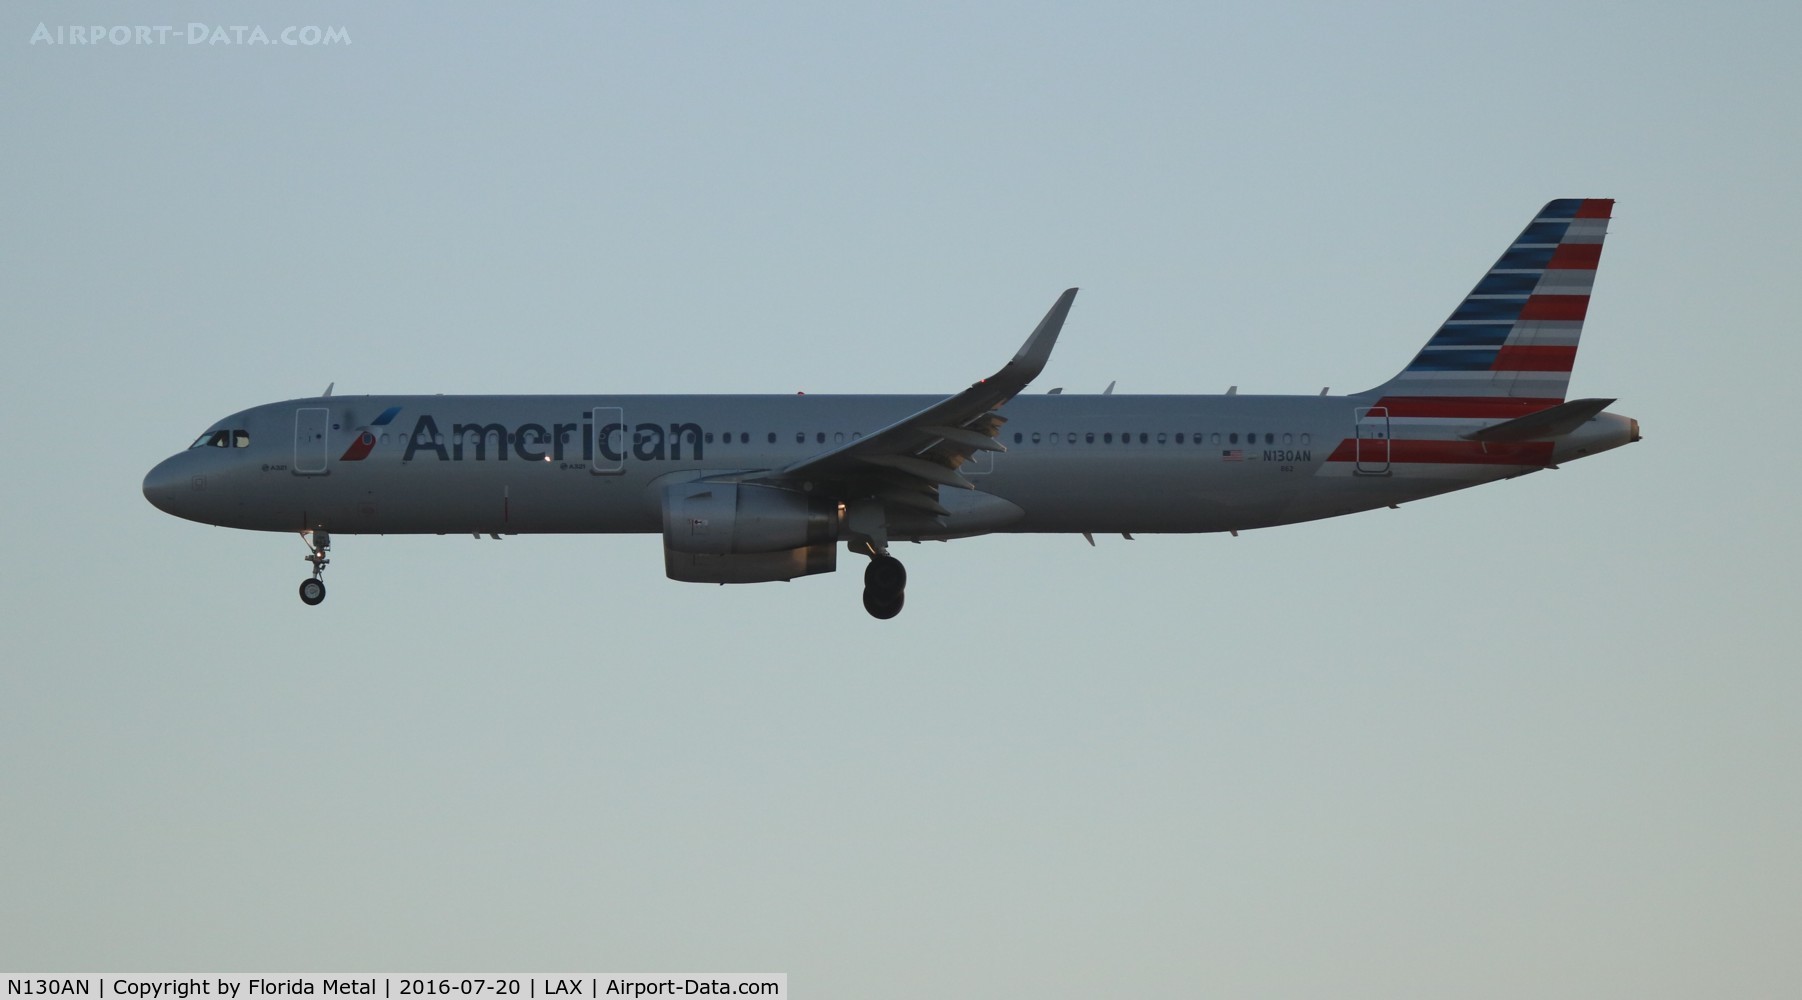 N130AN, 2014 Airbus A321-231 C/N 6407, American